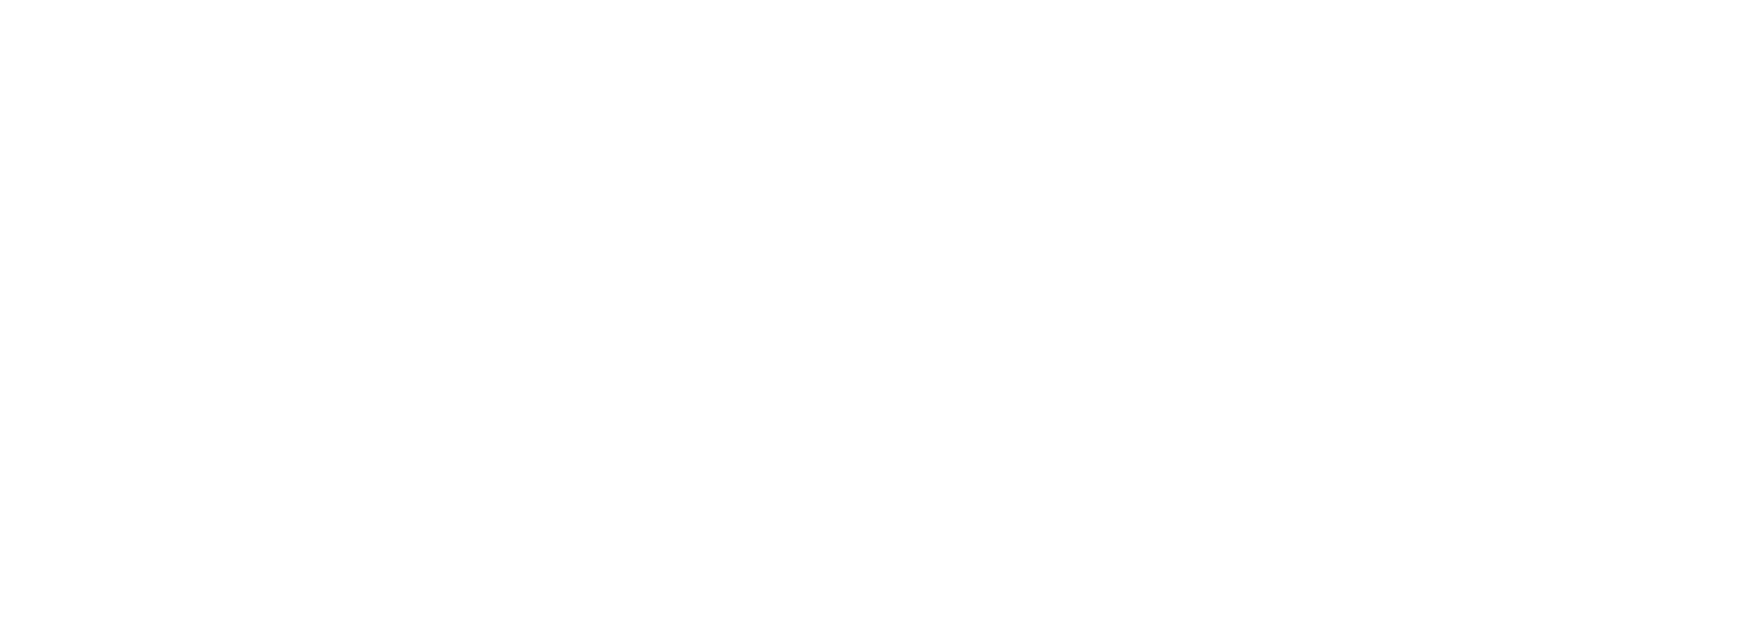 The Health Plan's logo